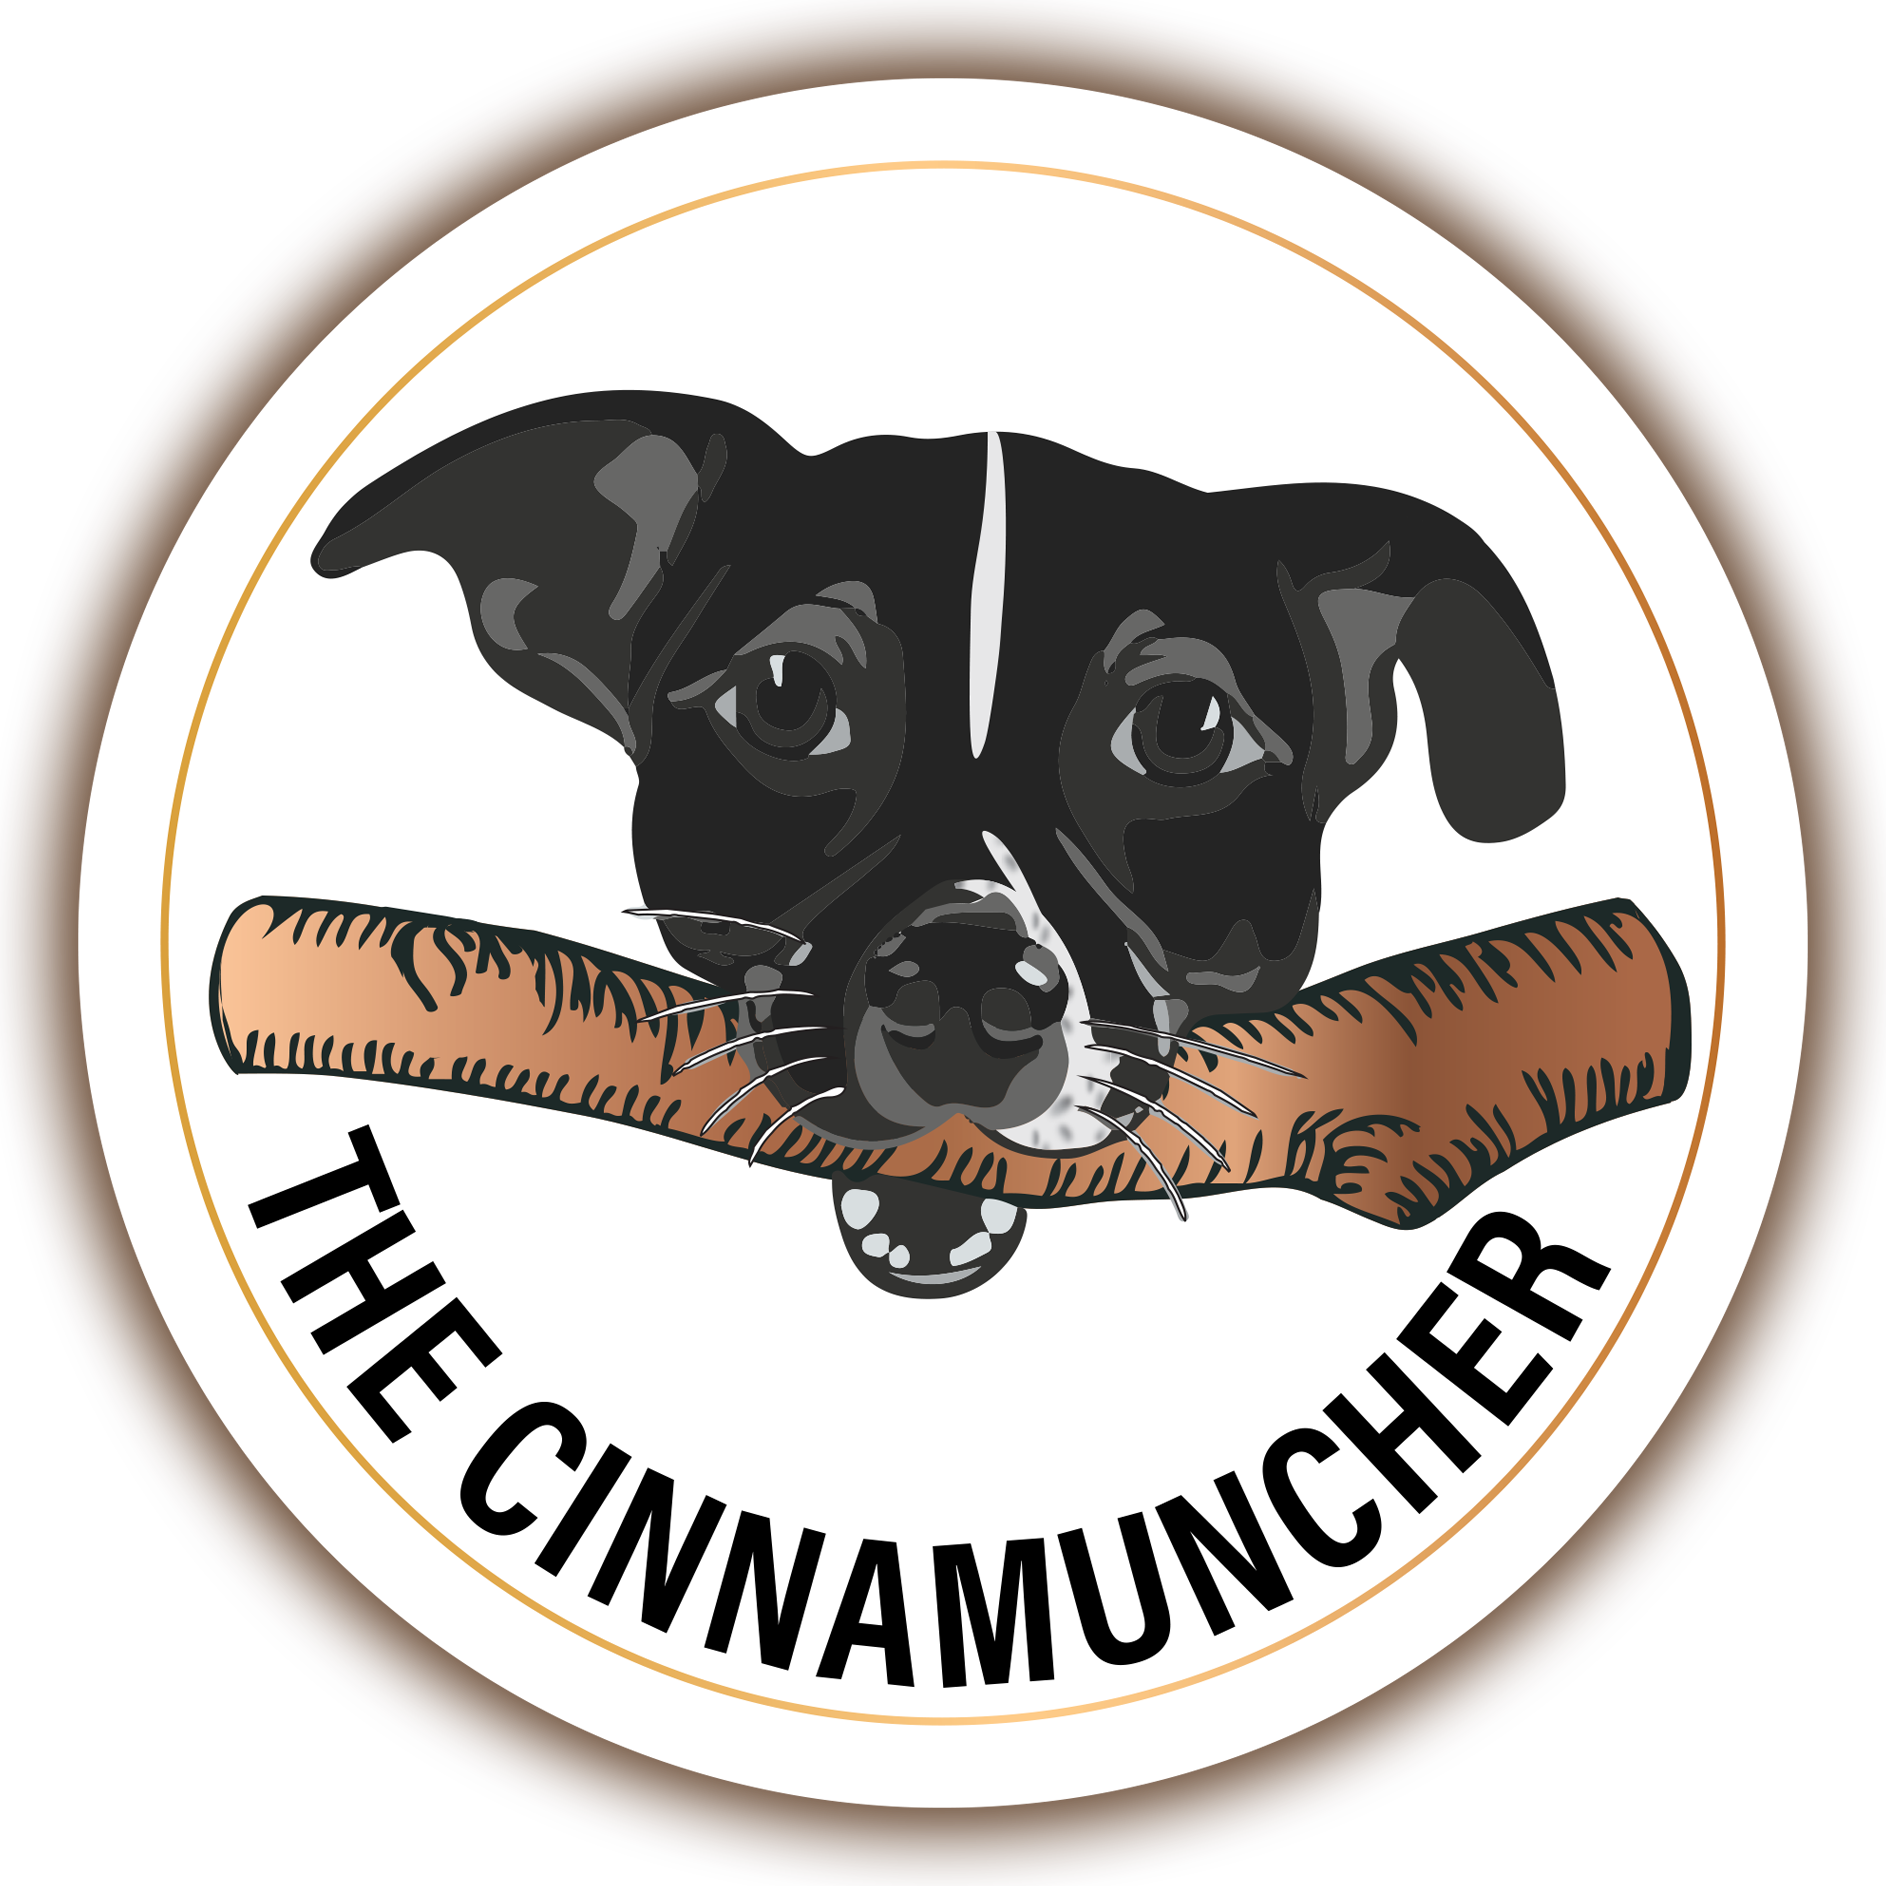 The Cinnamuncher